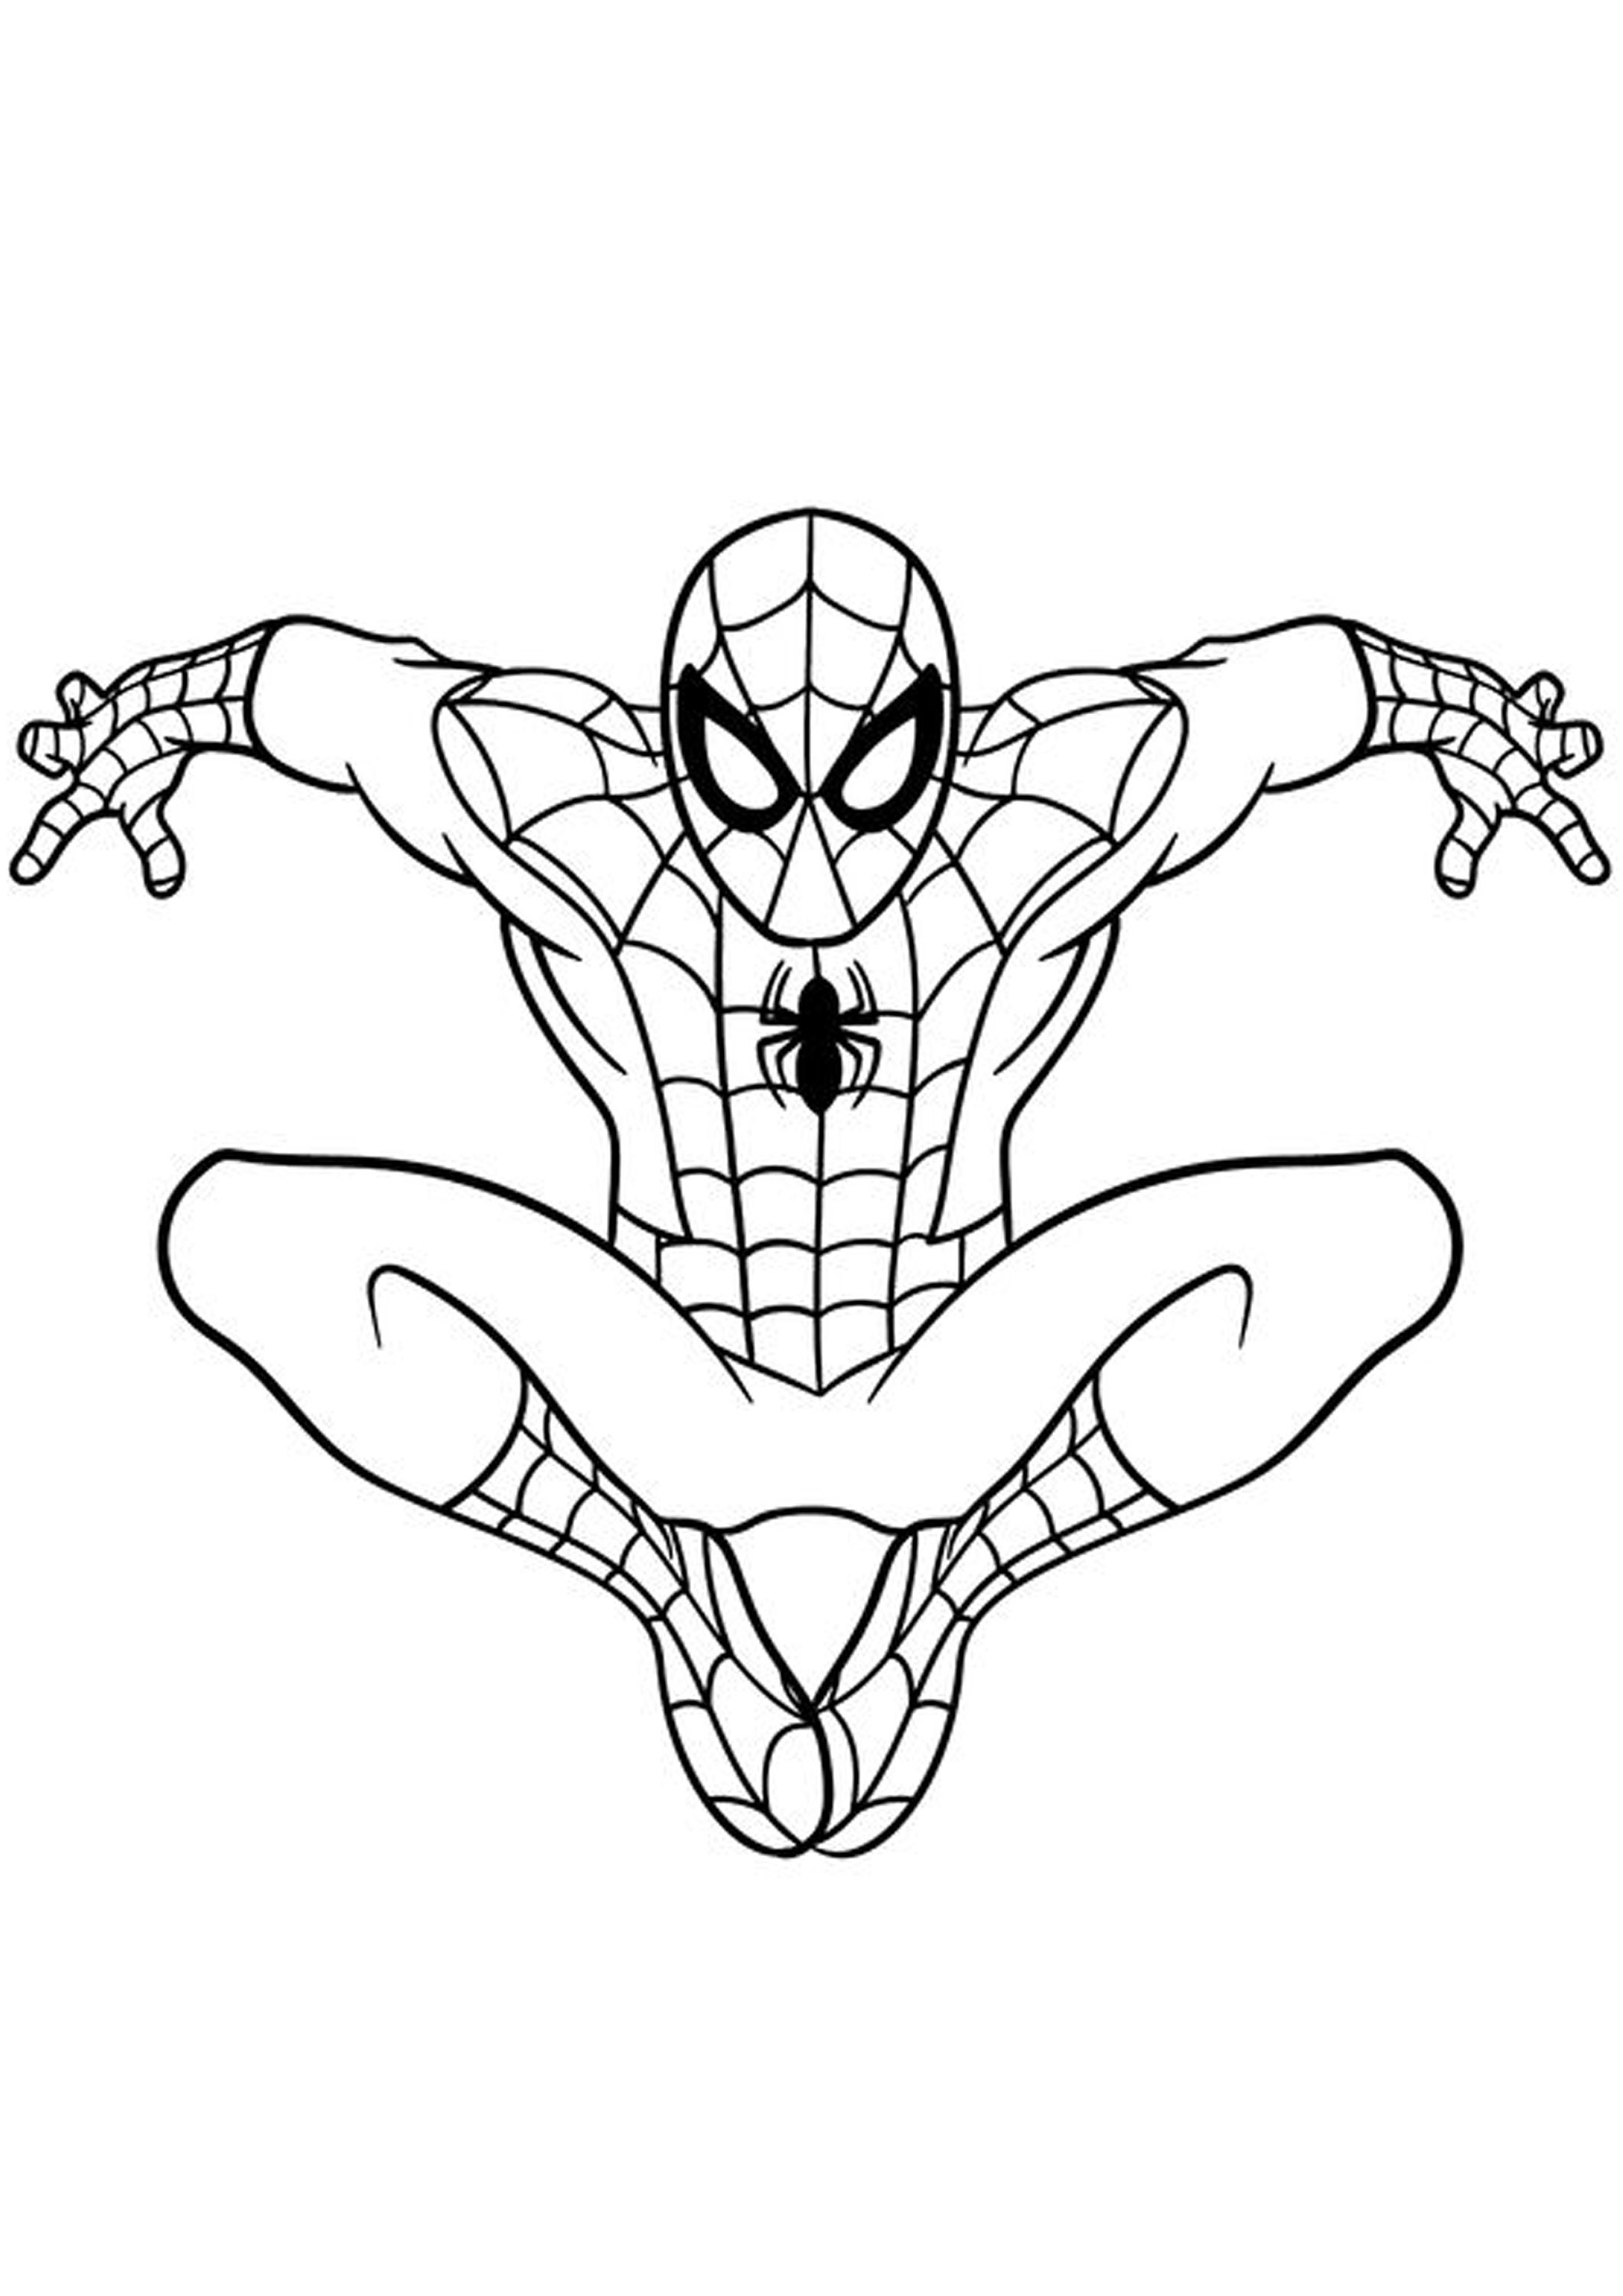 Spiderman Coloring Pages Pdf - SheetalColor.com